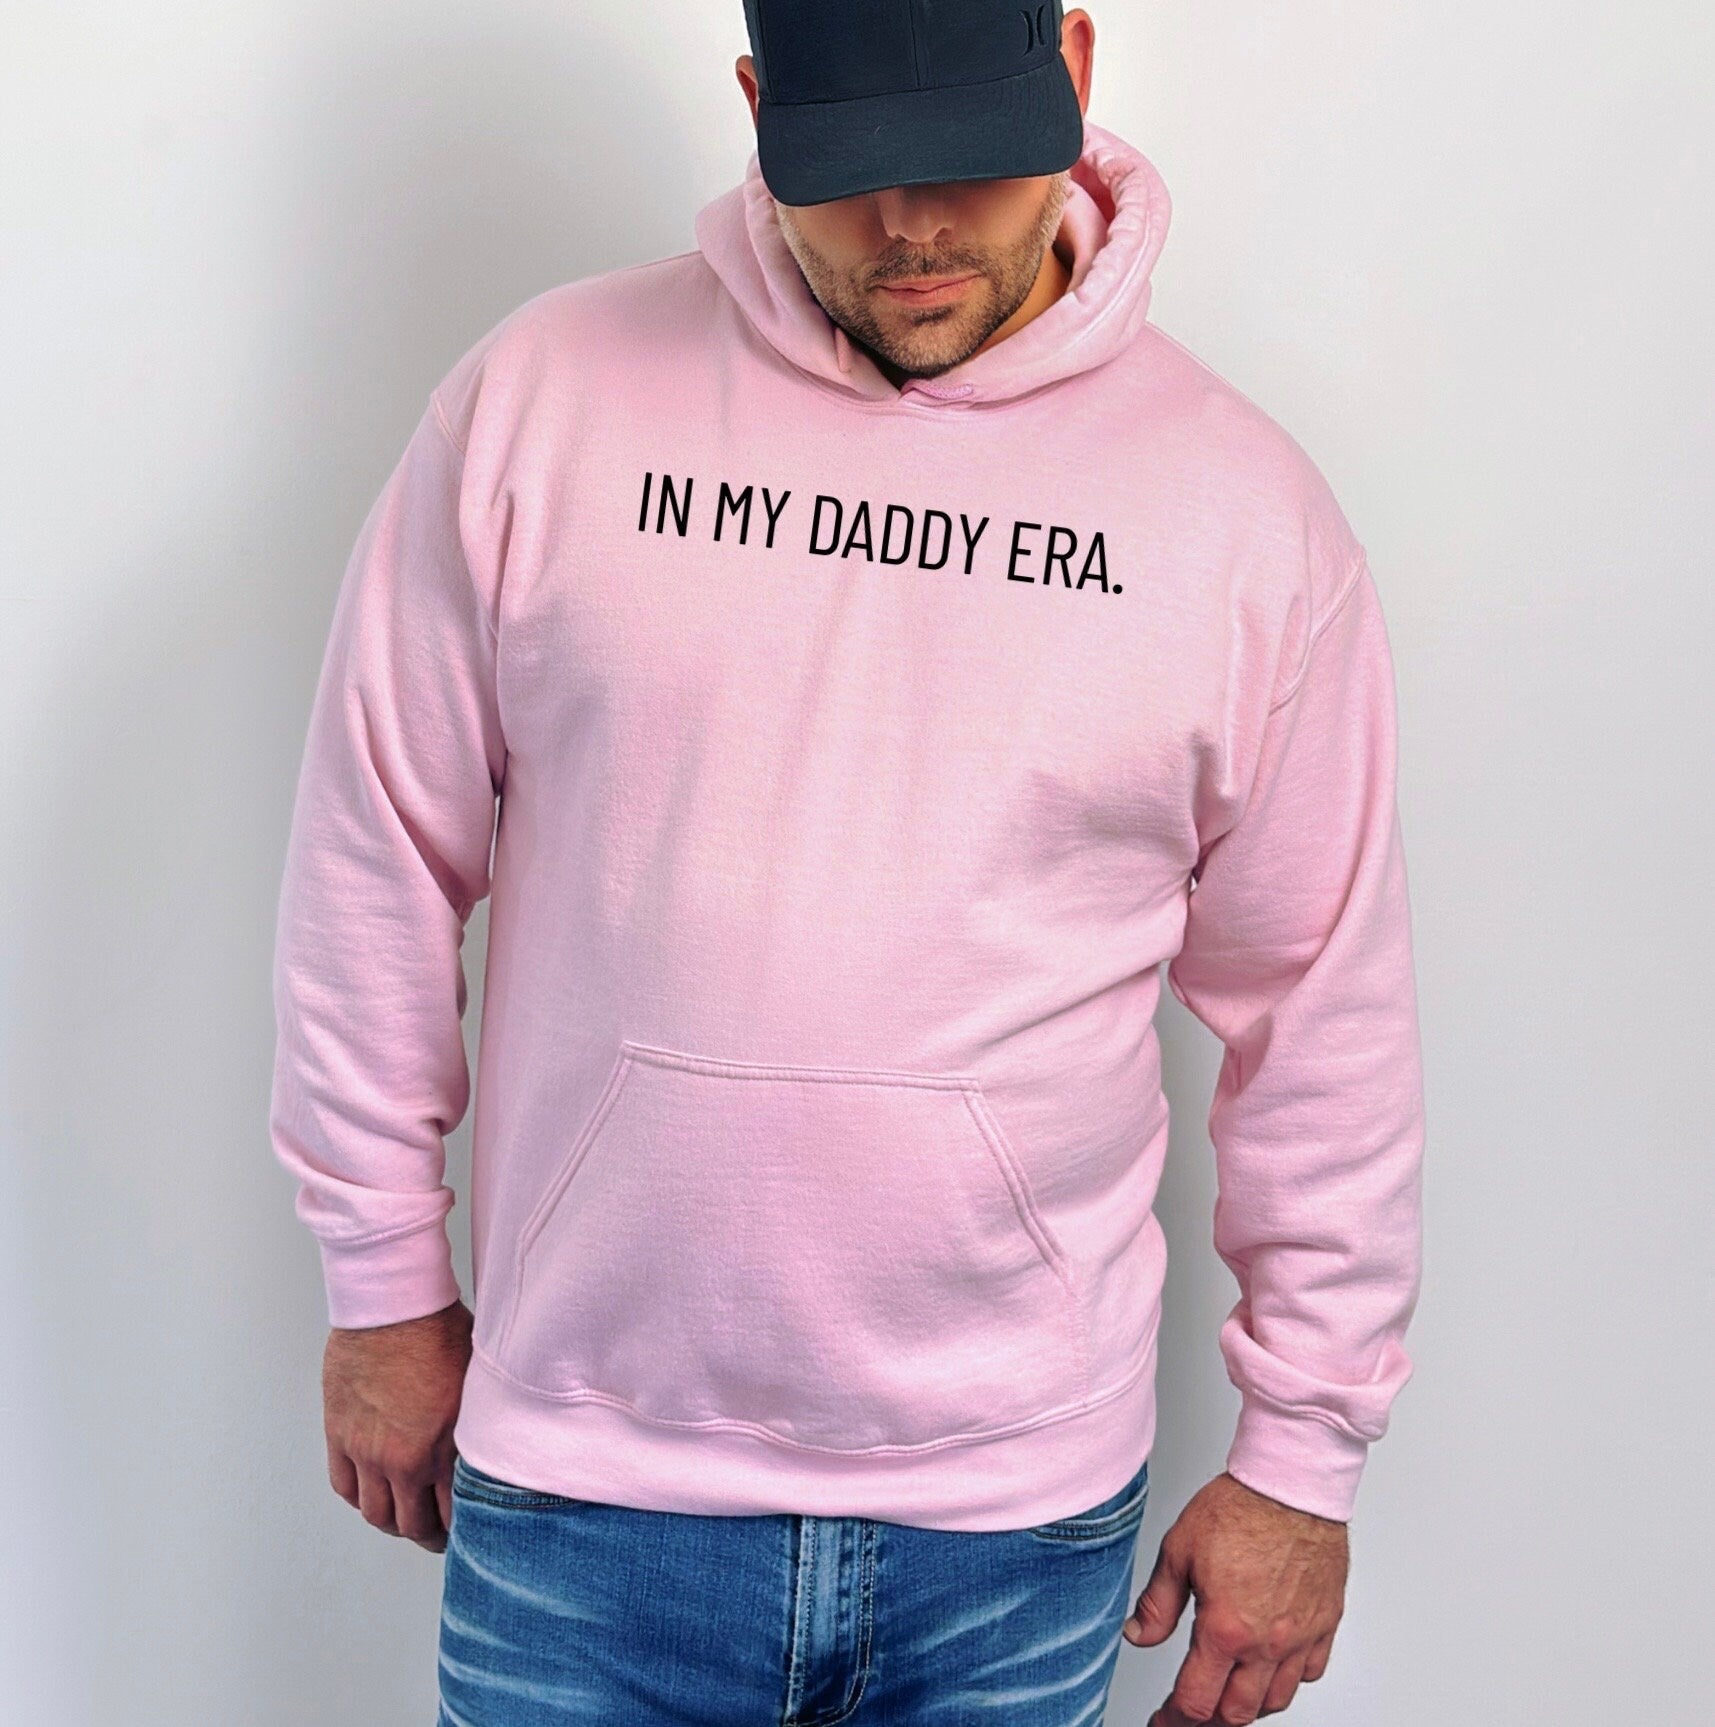 In My Daddy Era Sweatshirt, In My Daddy Era Shirt, In My Daddy Era Crewneck, In My Daddy Era Sweater, Oversized Sweater, Comfy Sweatshirt